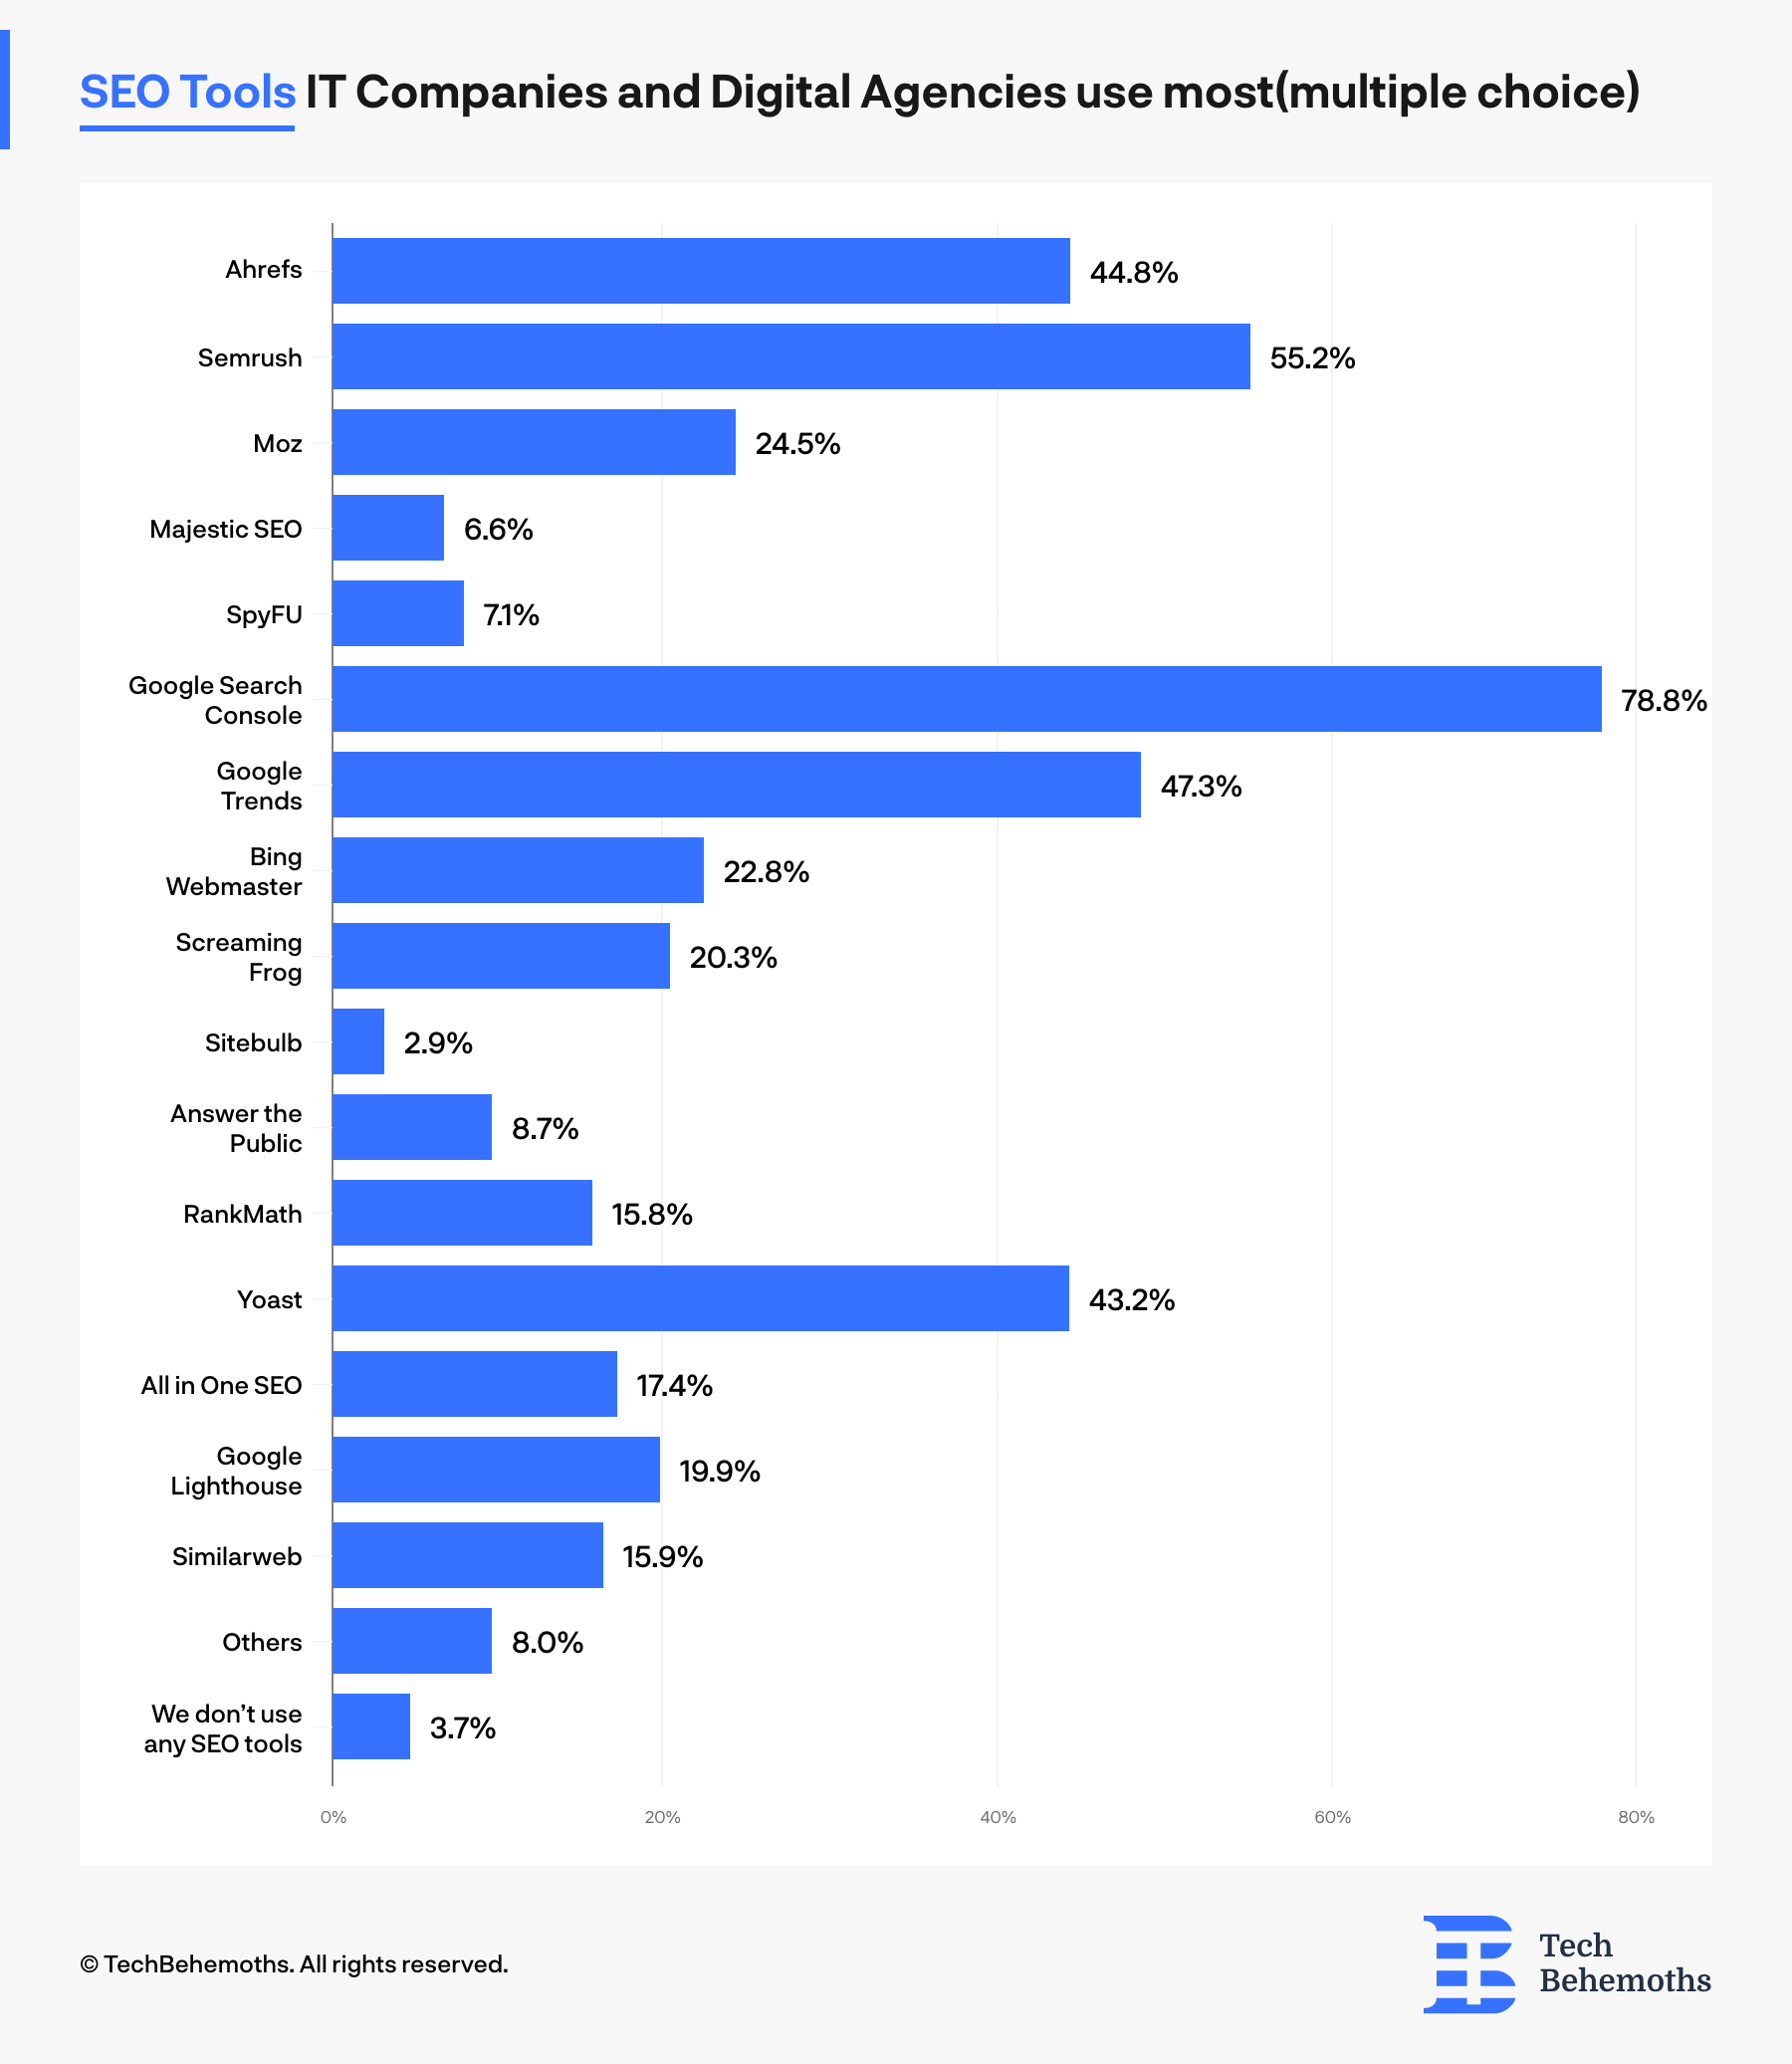 Top SEO tools IT companies and digital agencies use most